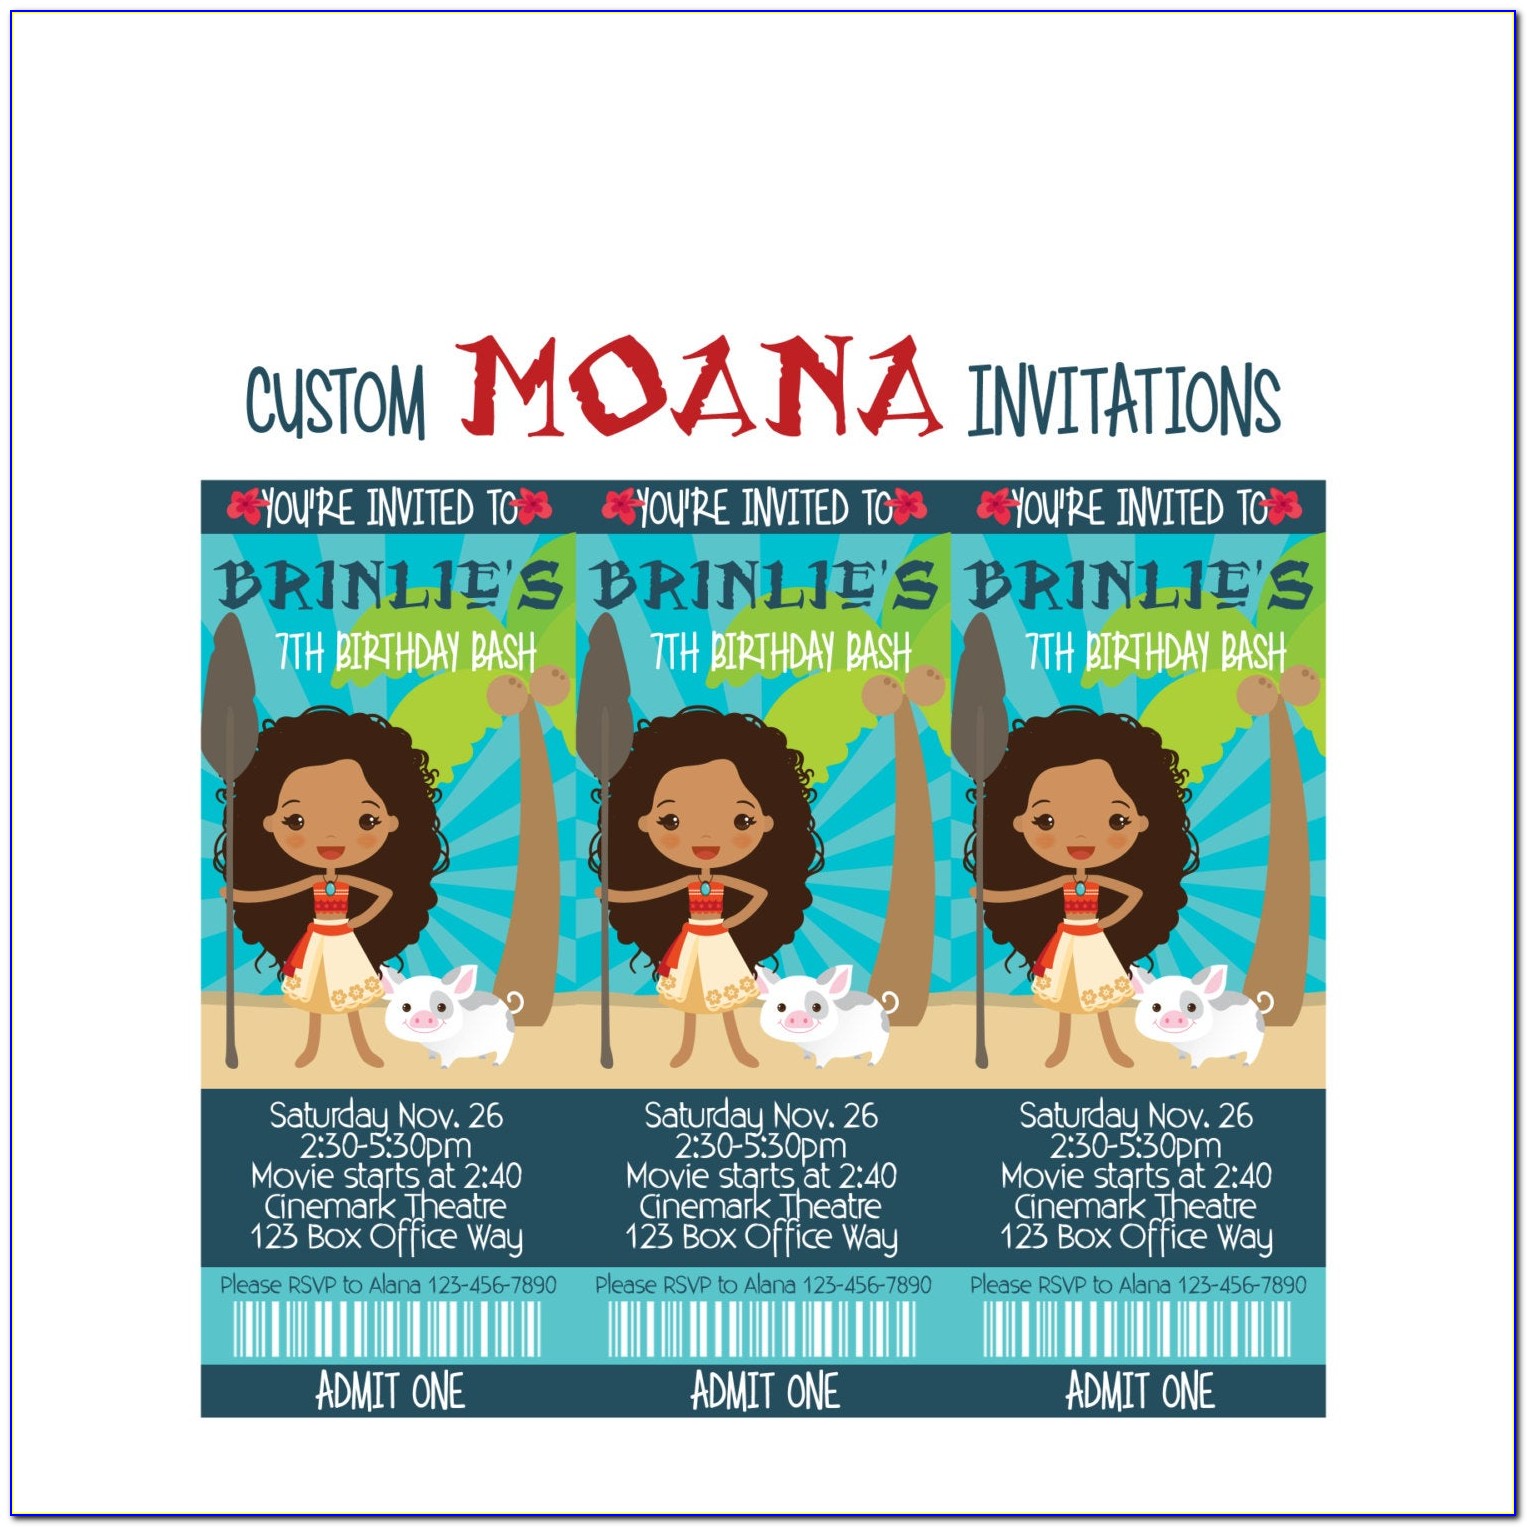 Personalized Moana Invitations